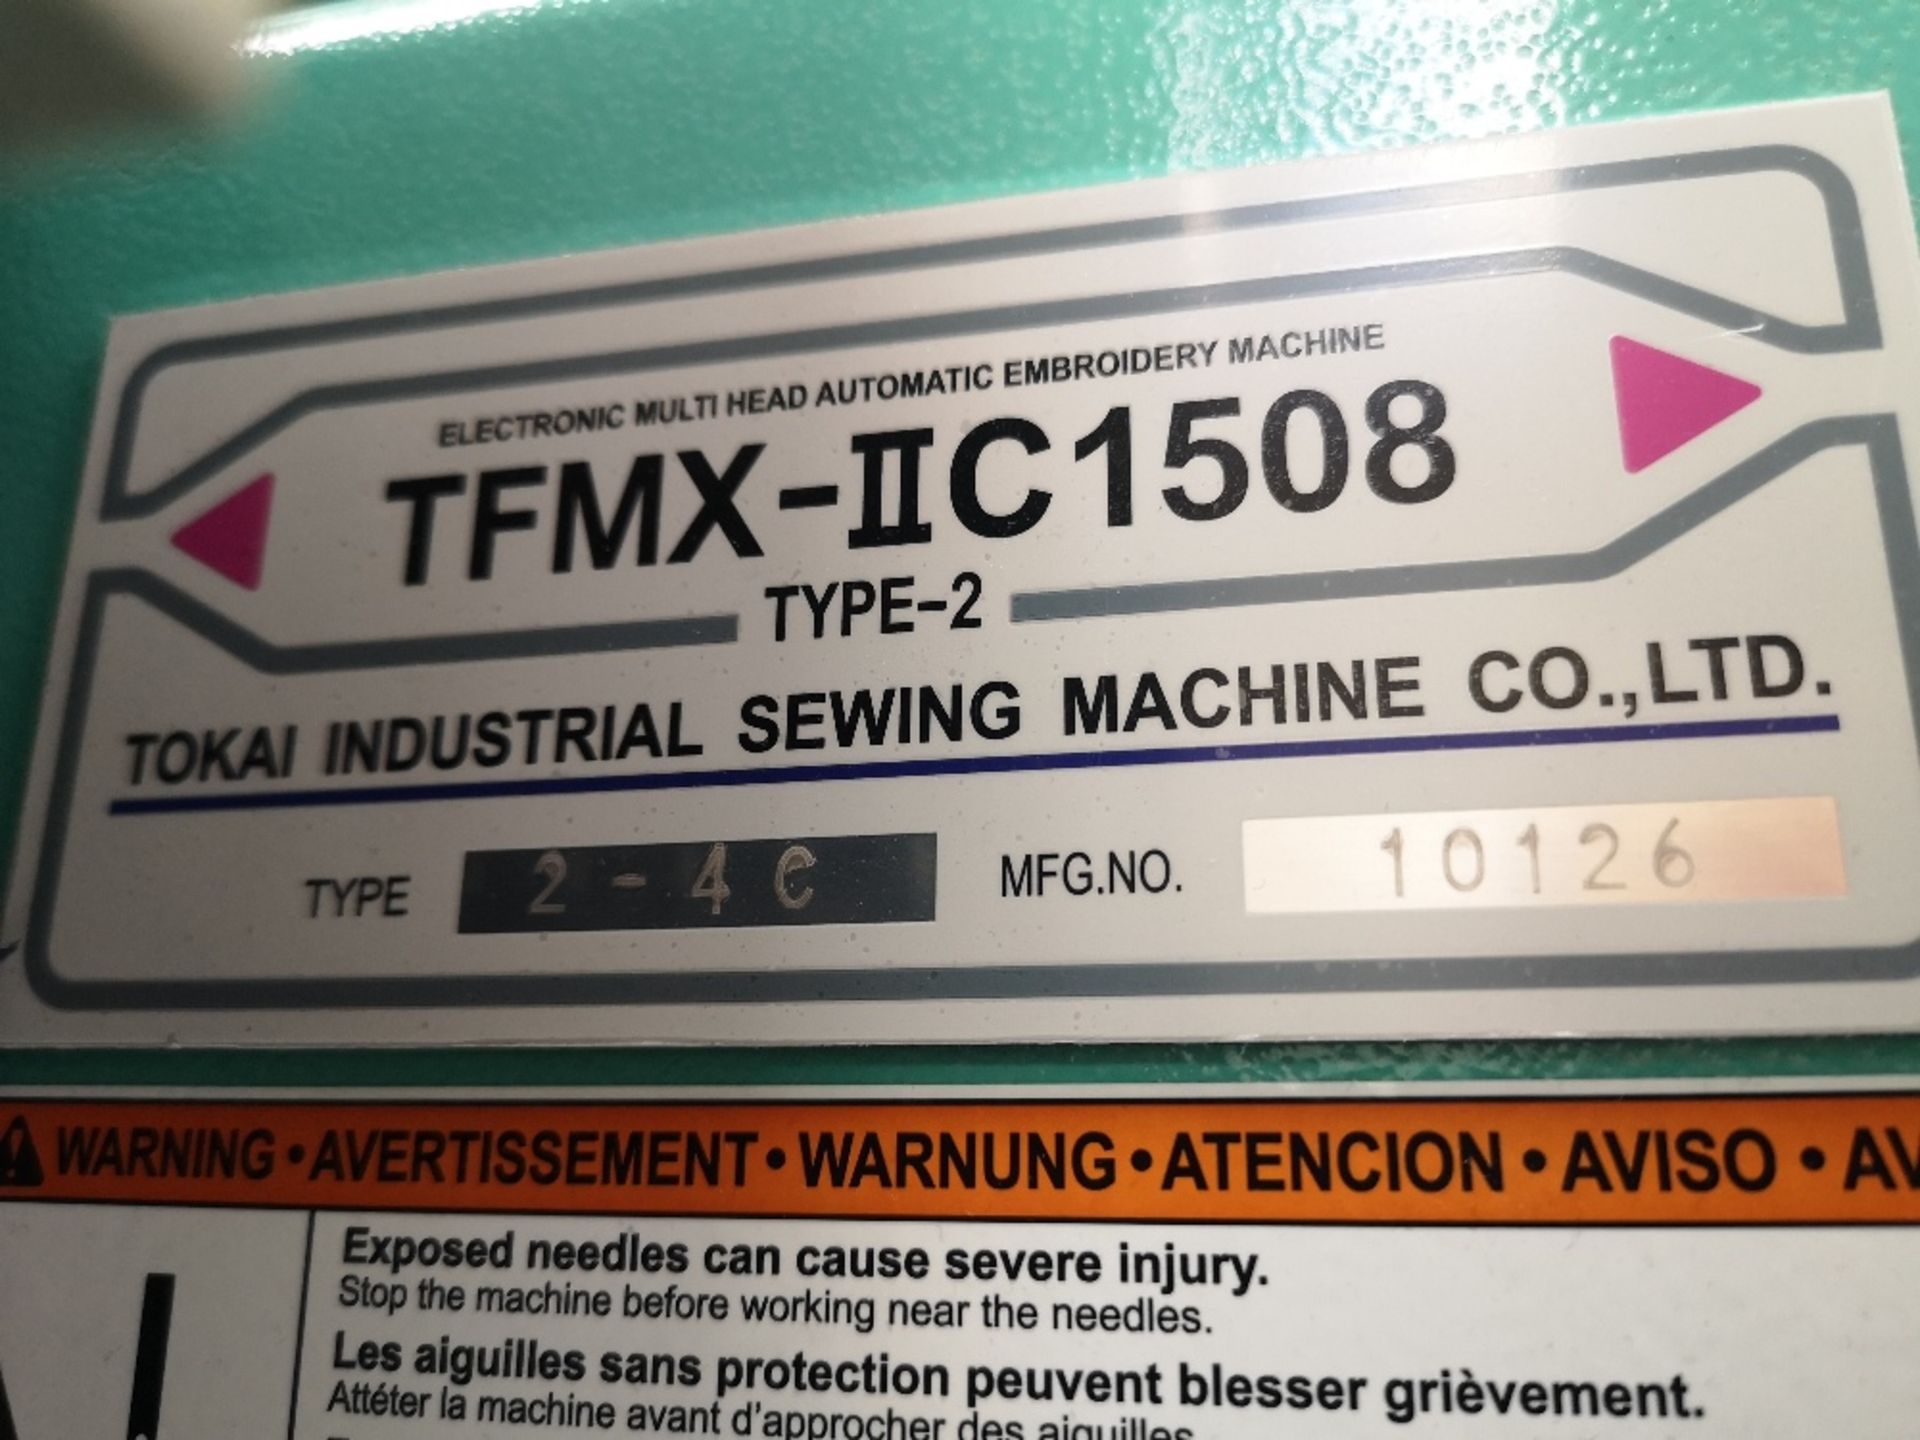 Tajima TFMX-II C1508 Electronic Multi Head Automatic Embroidery Machine (2017) - Image 8 of 12